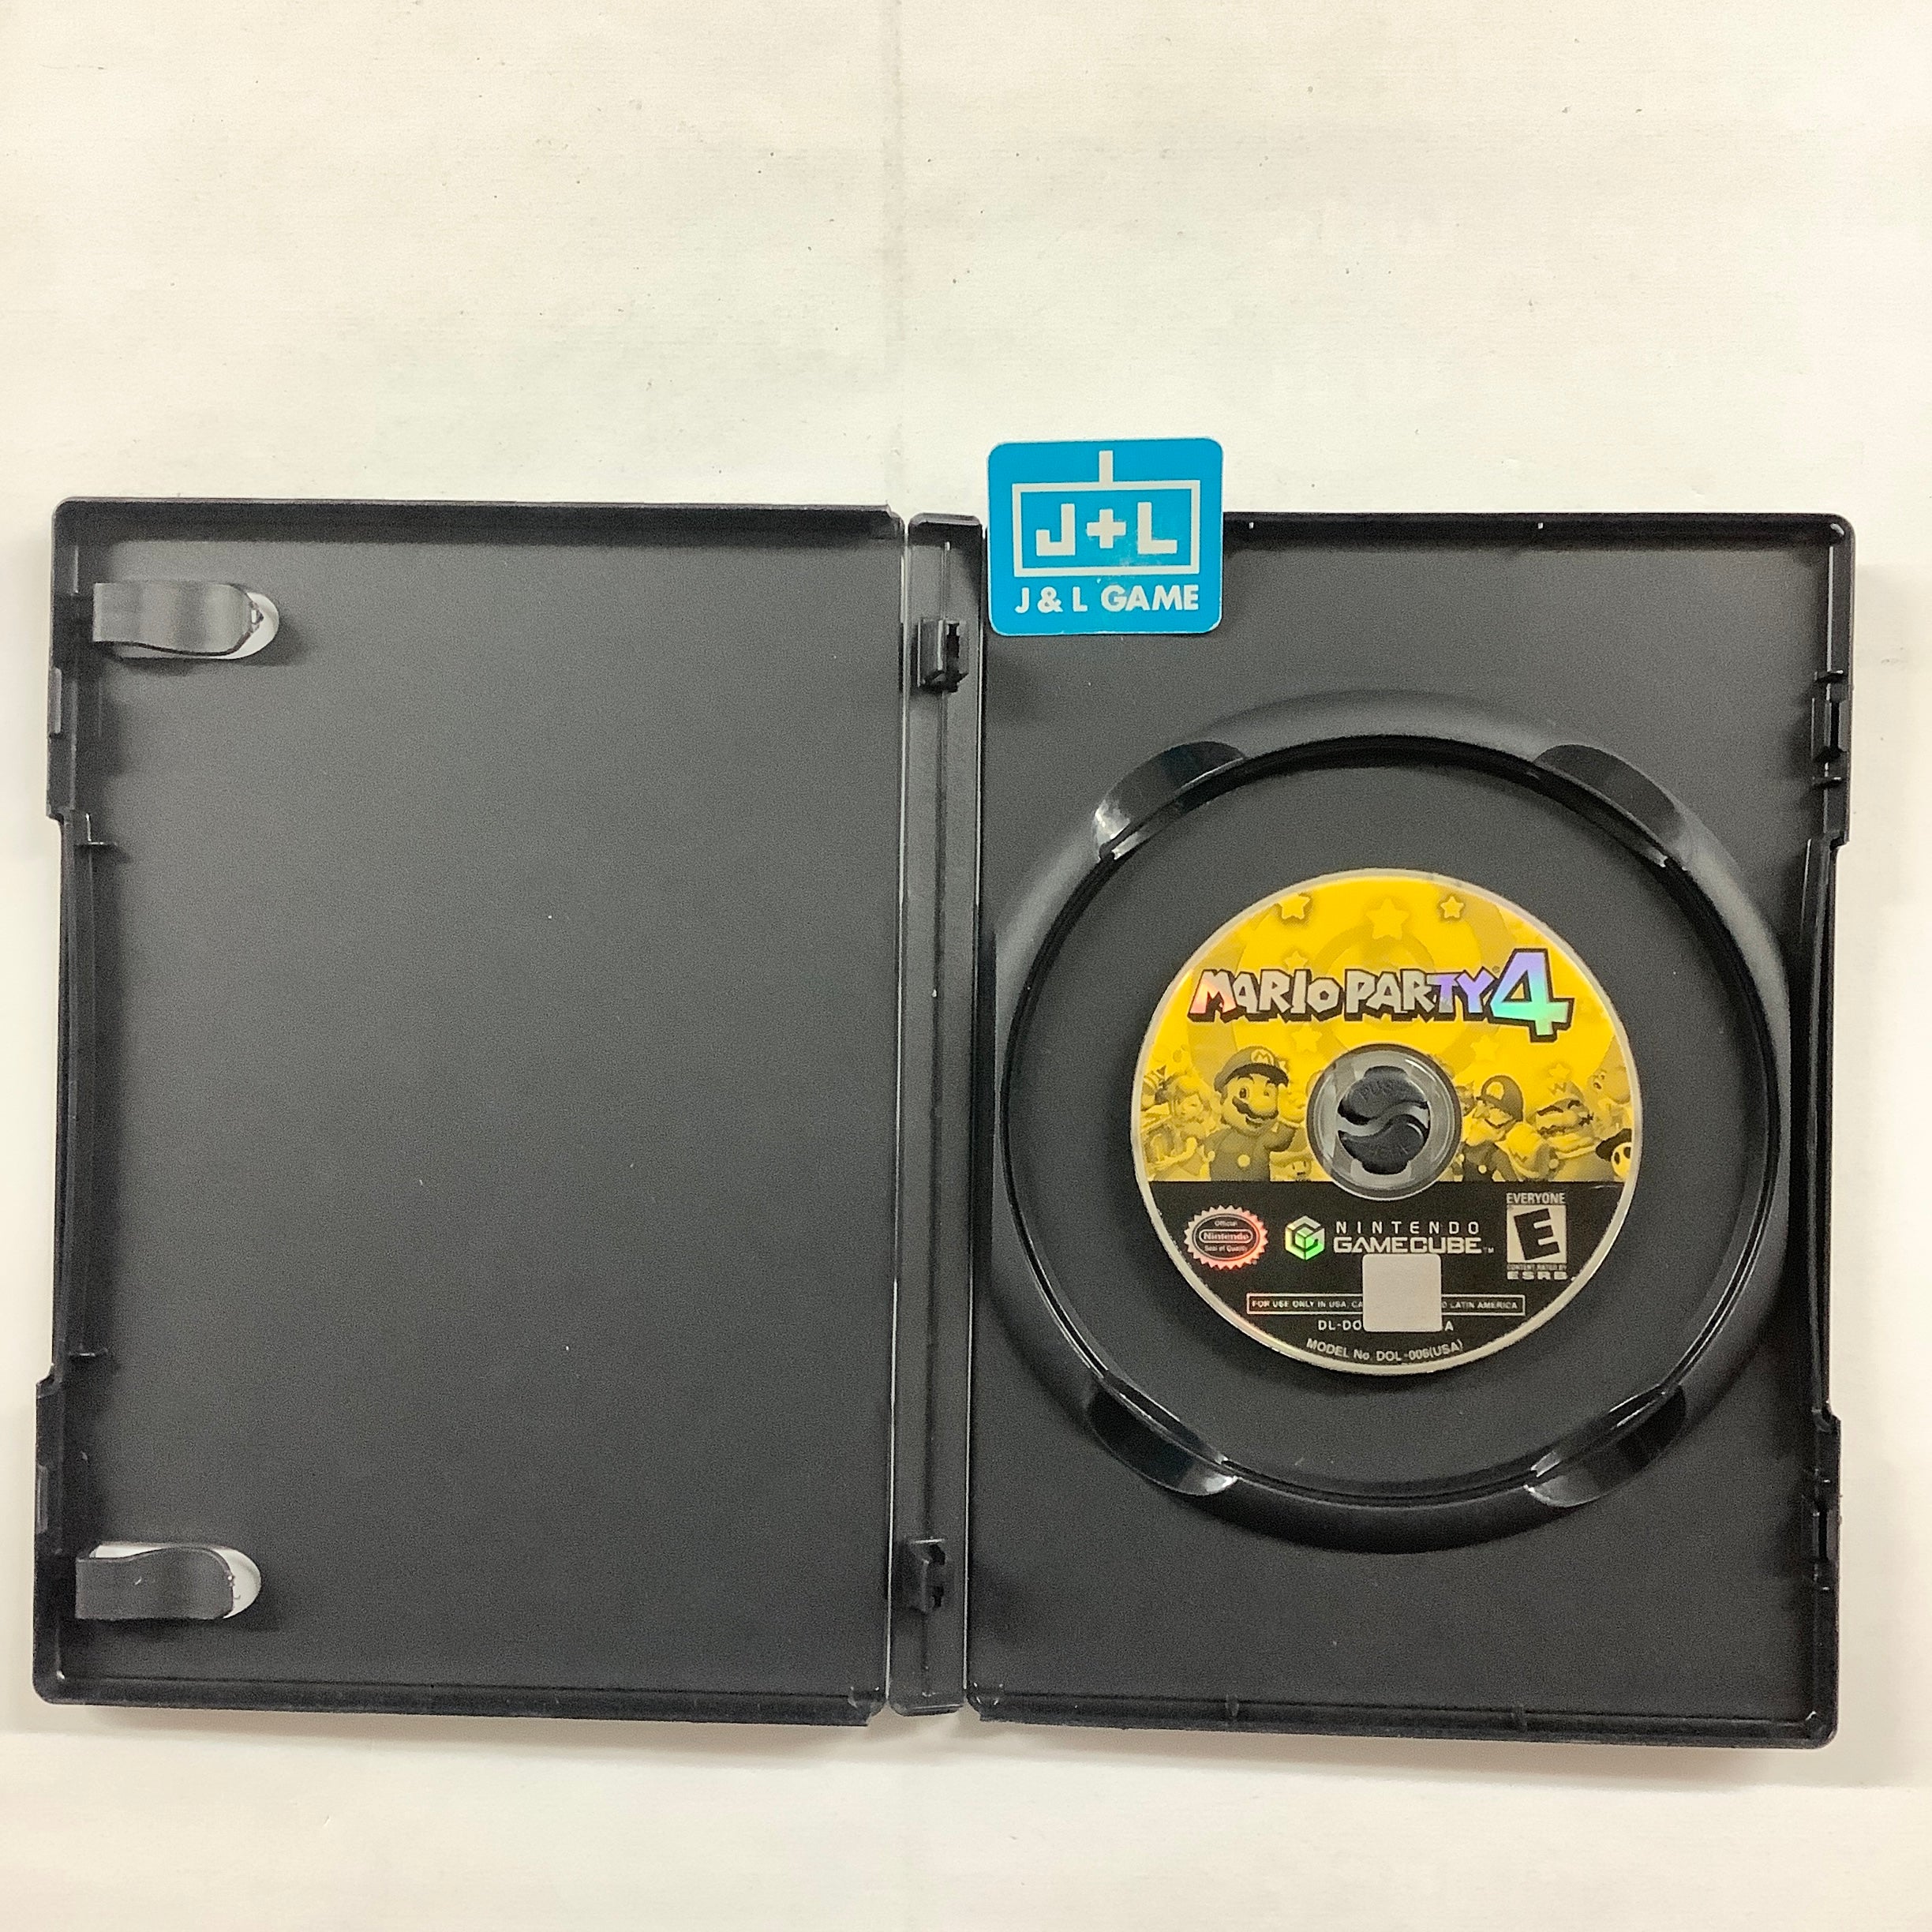 Mario Party 4 - (GC) GameCube [Pre-Owned] Video Games Nintendo   